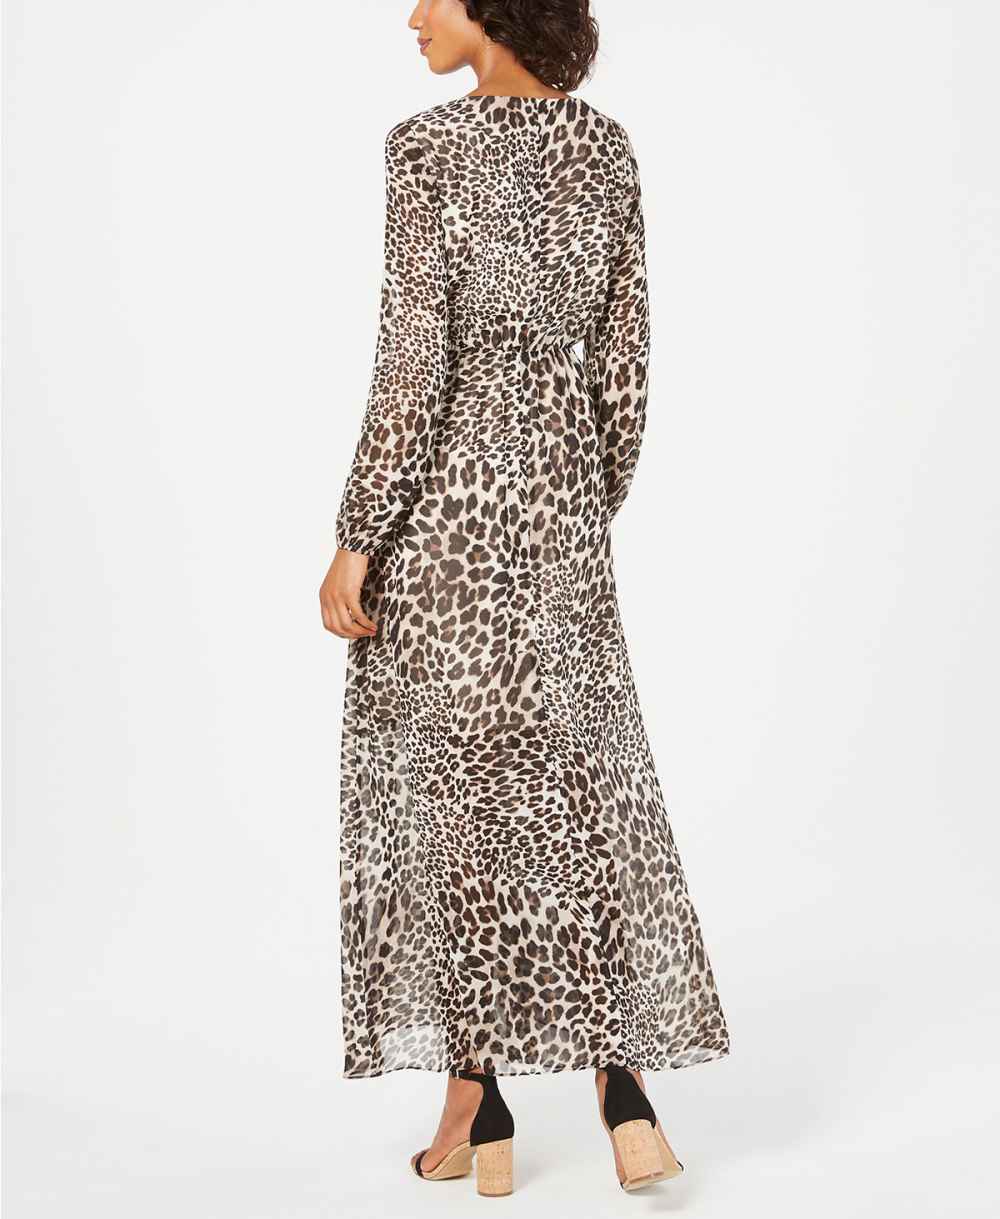 inc leopard dress back